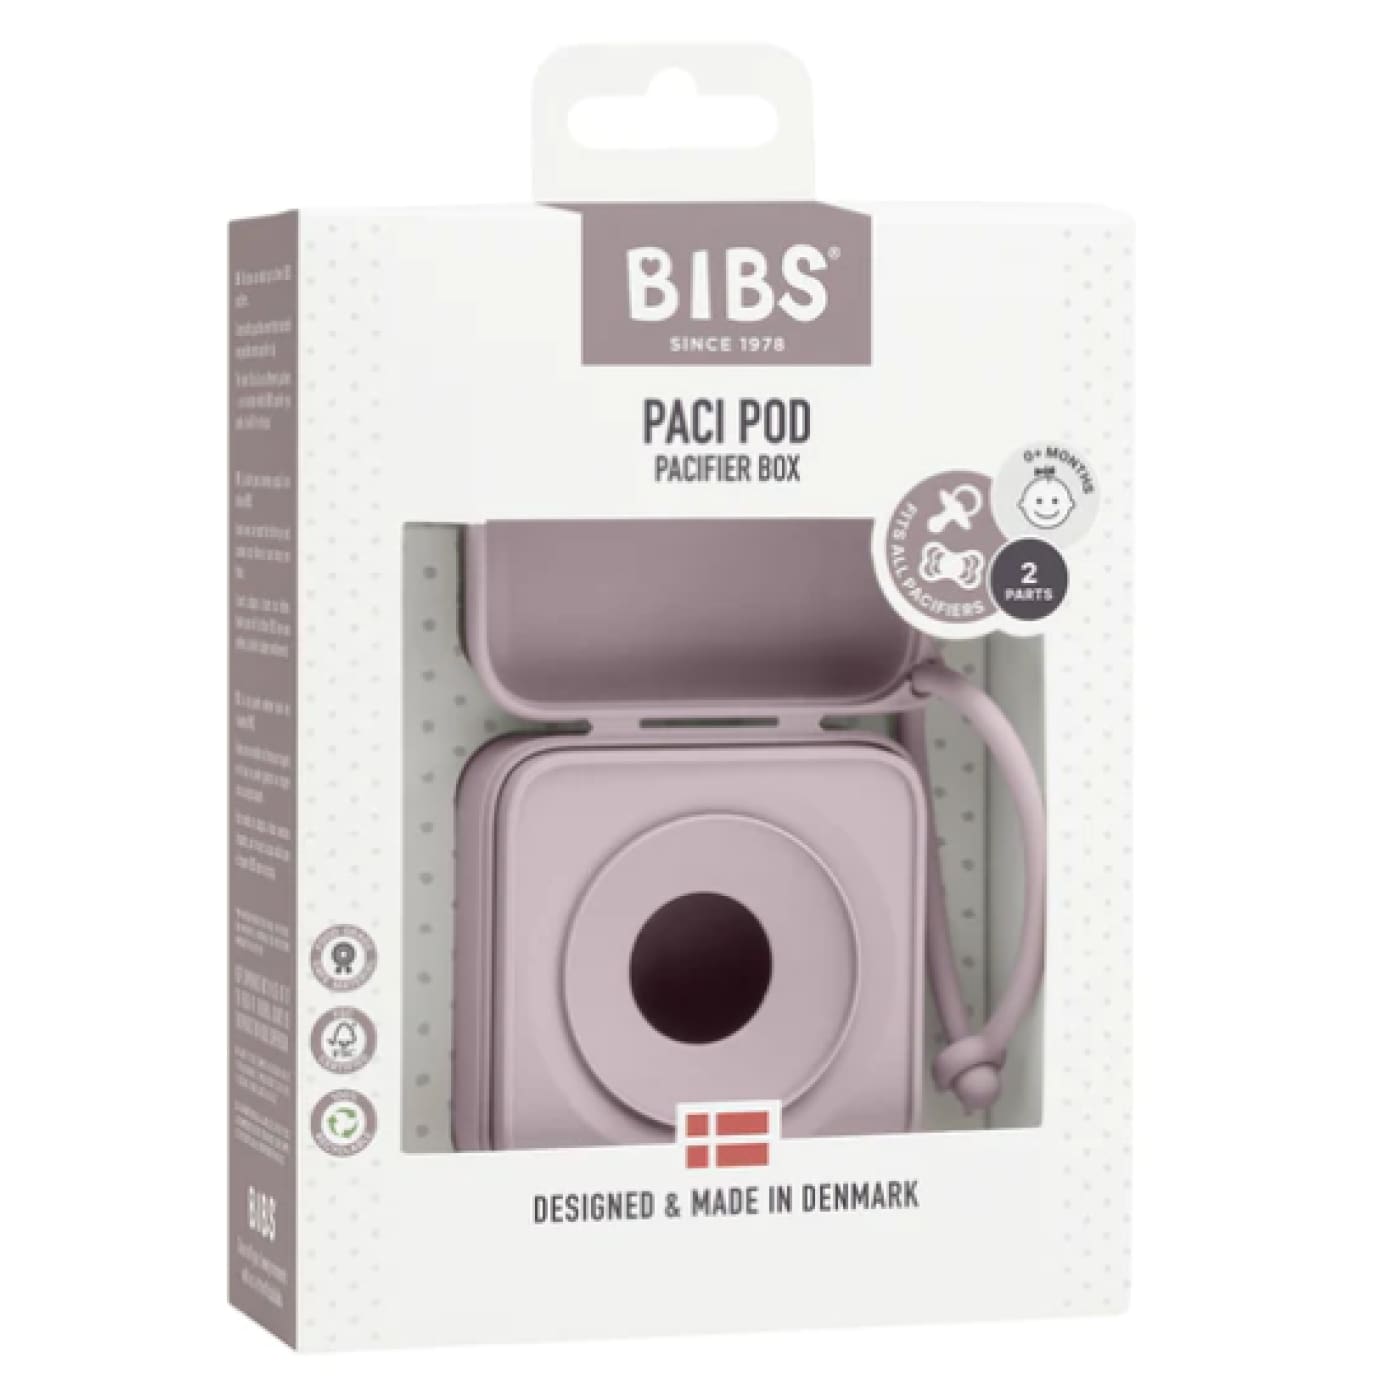 BIBS Pacifier Box - Dusky Lilac - Dusky Lilac - NURSING & FEEDING - DUMMIES/SOOTHERS/CLIPS